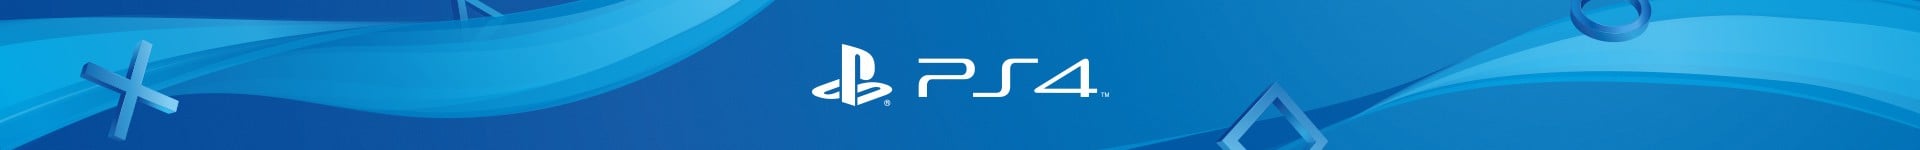 Buy Playstation 4 consoles at Coolshop